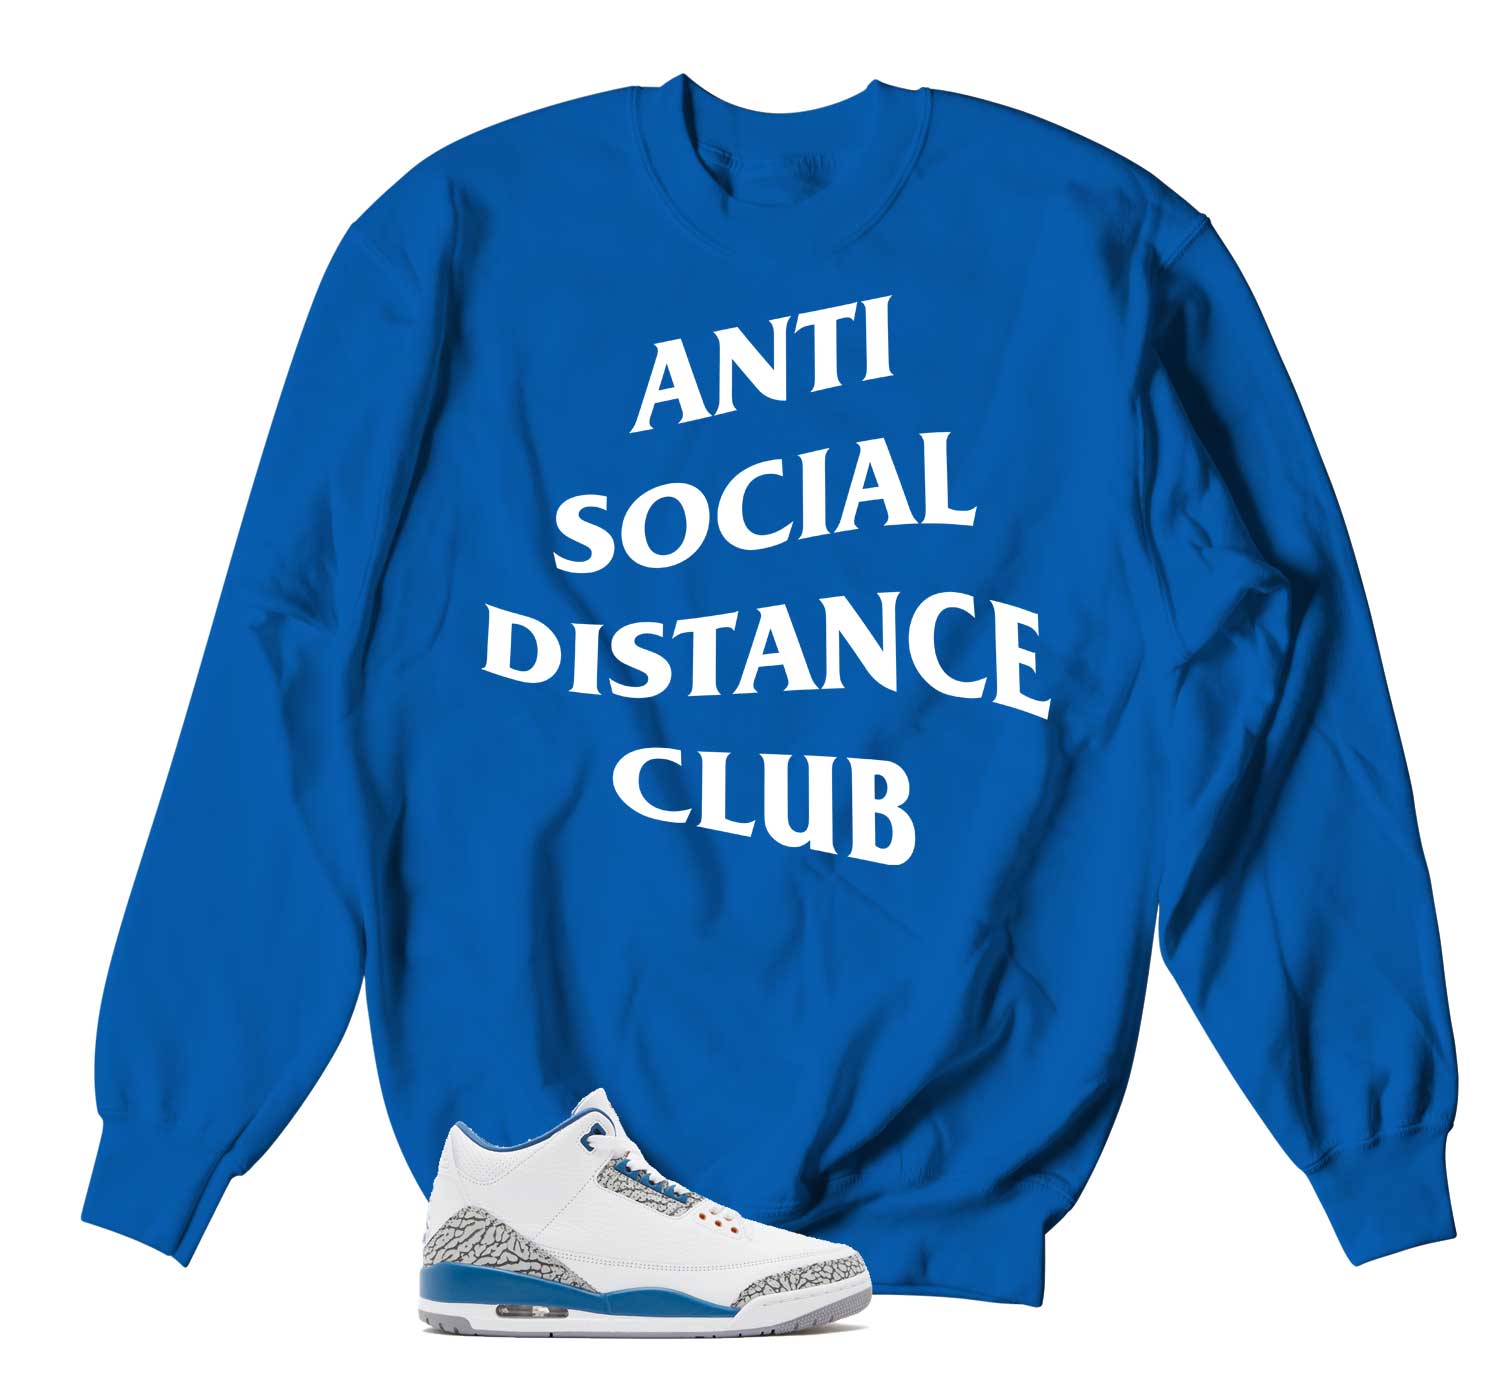 Retro 3 Wizards Sweater - Social Distance - True Blue